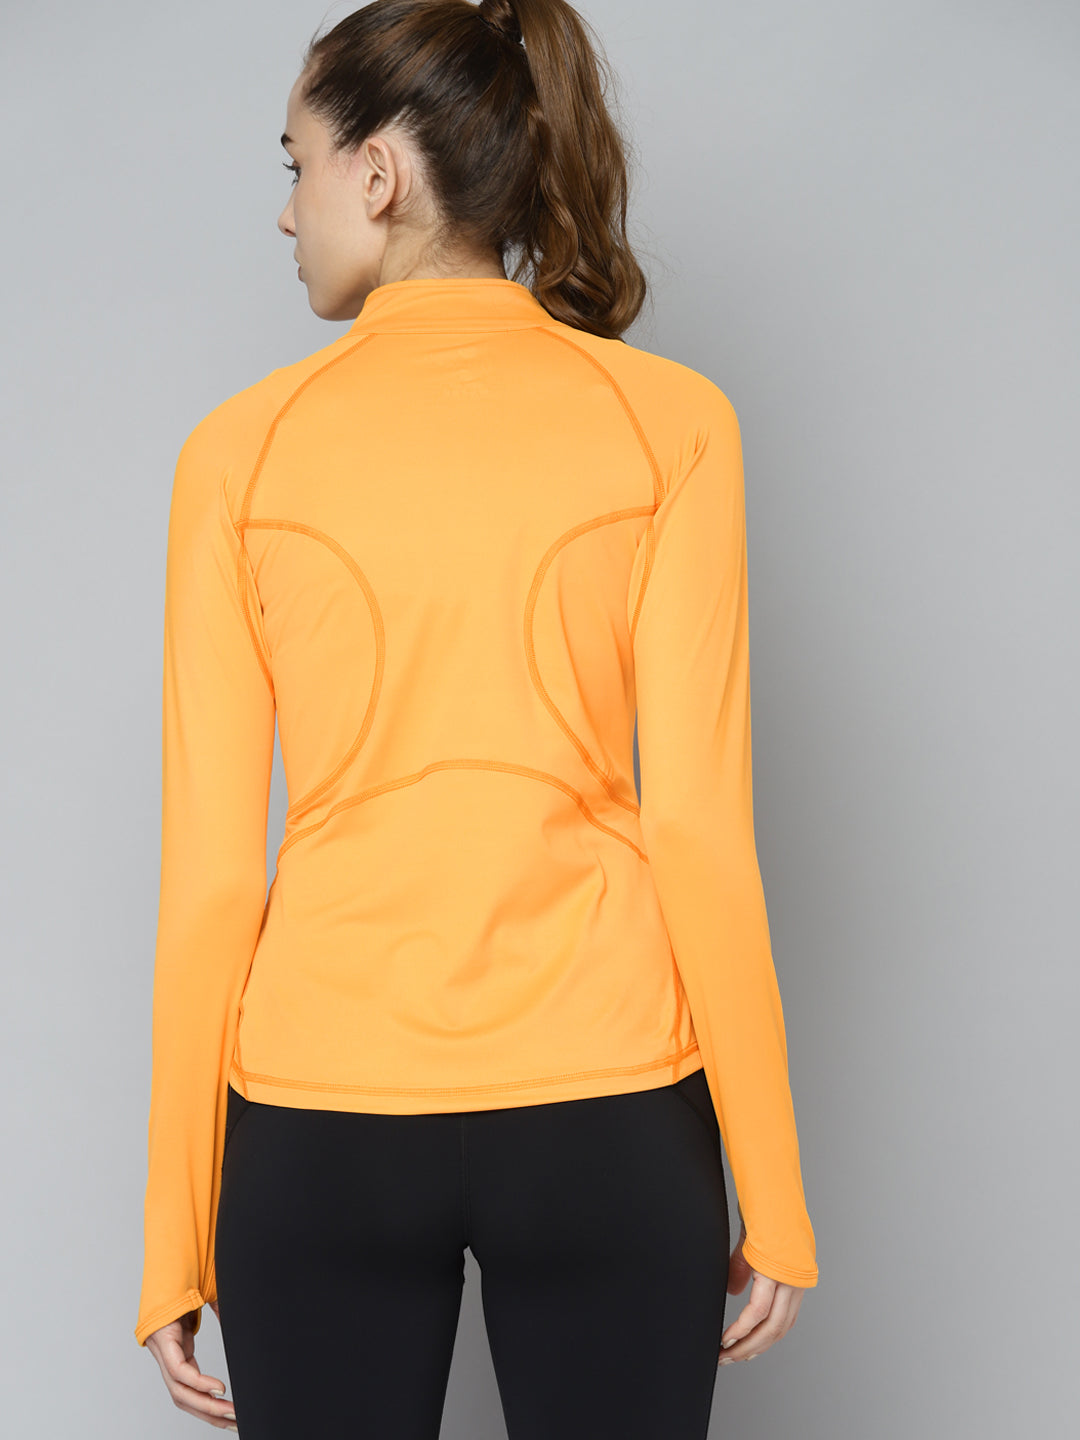 Women's Yellow High Neck Training T-shirt – Fitkin